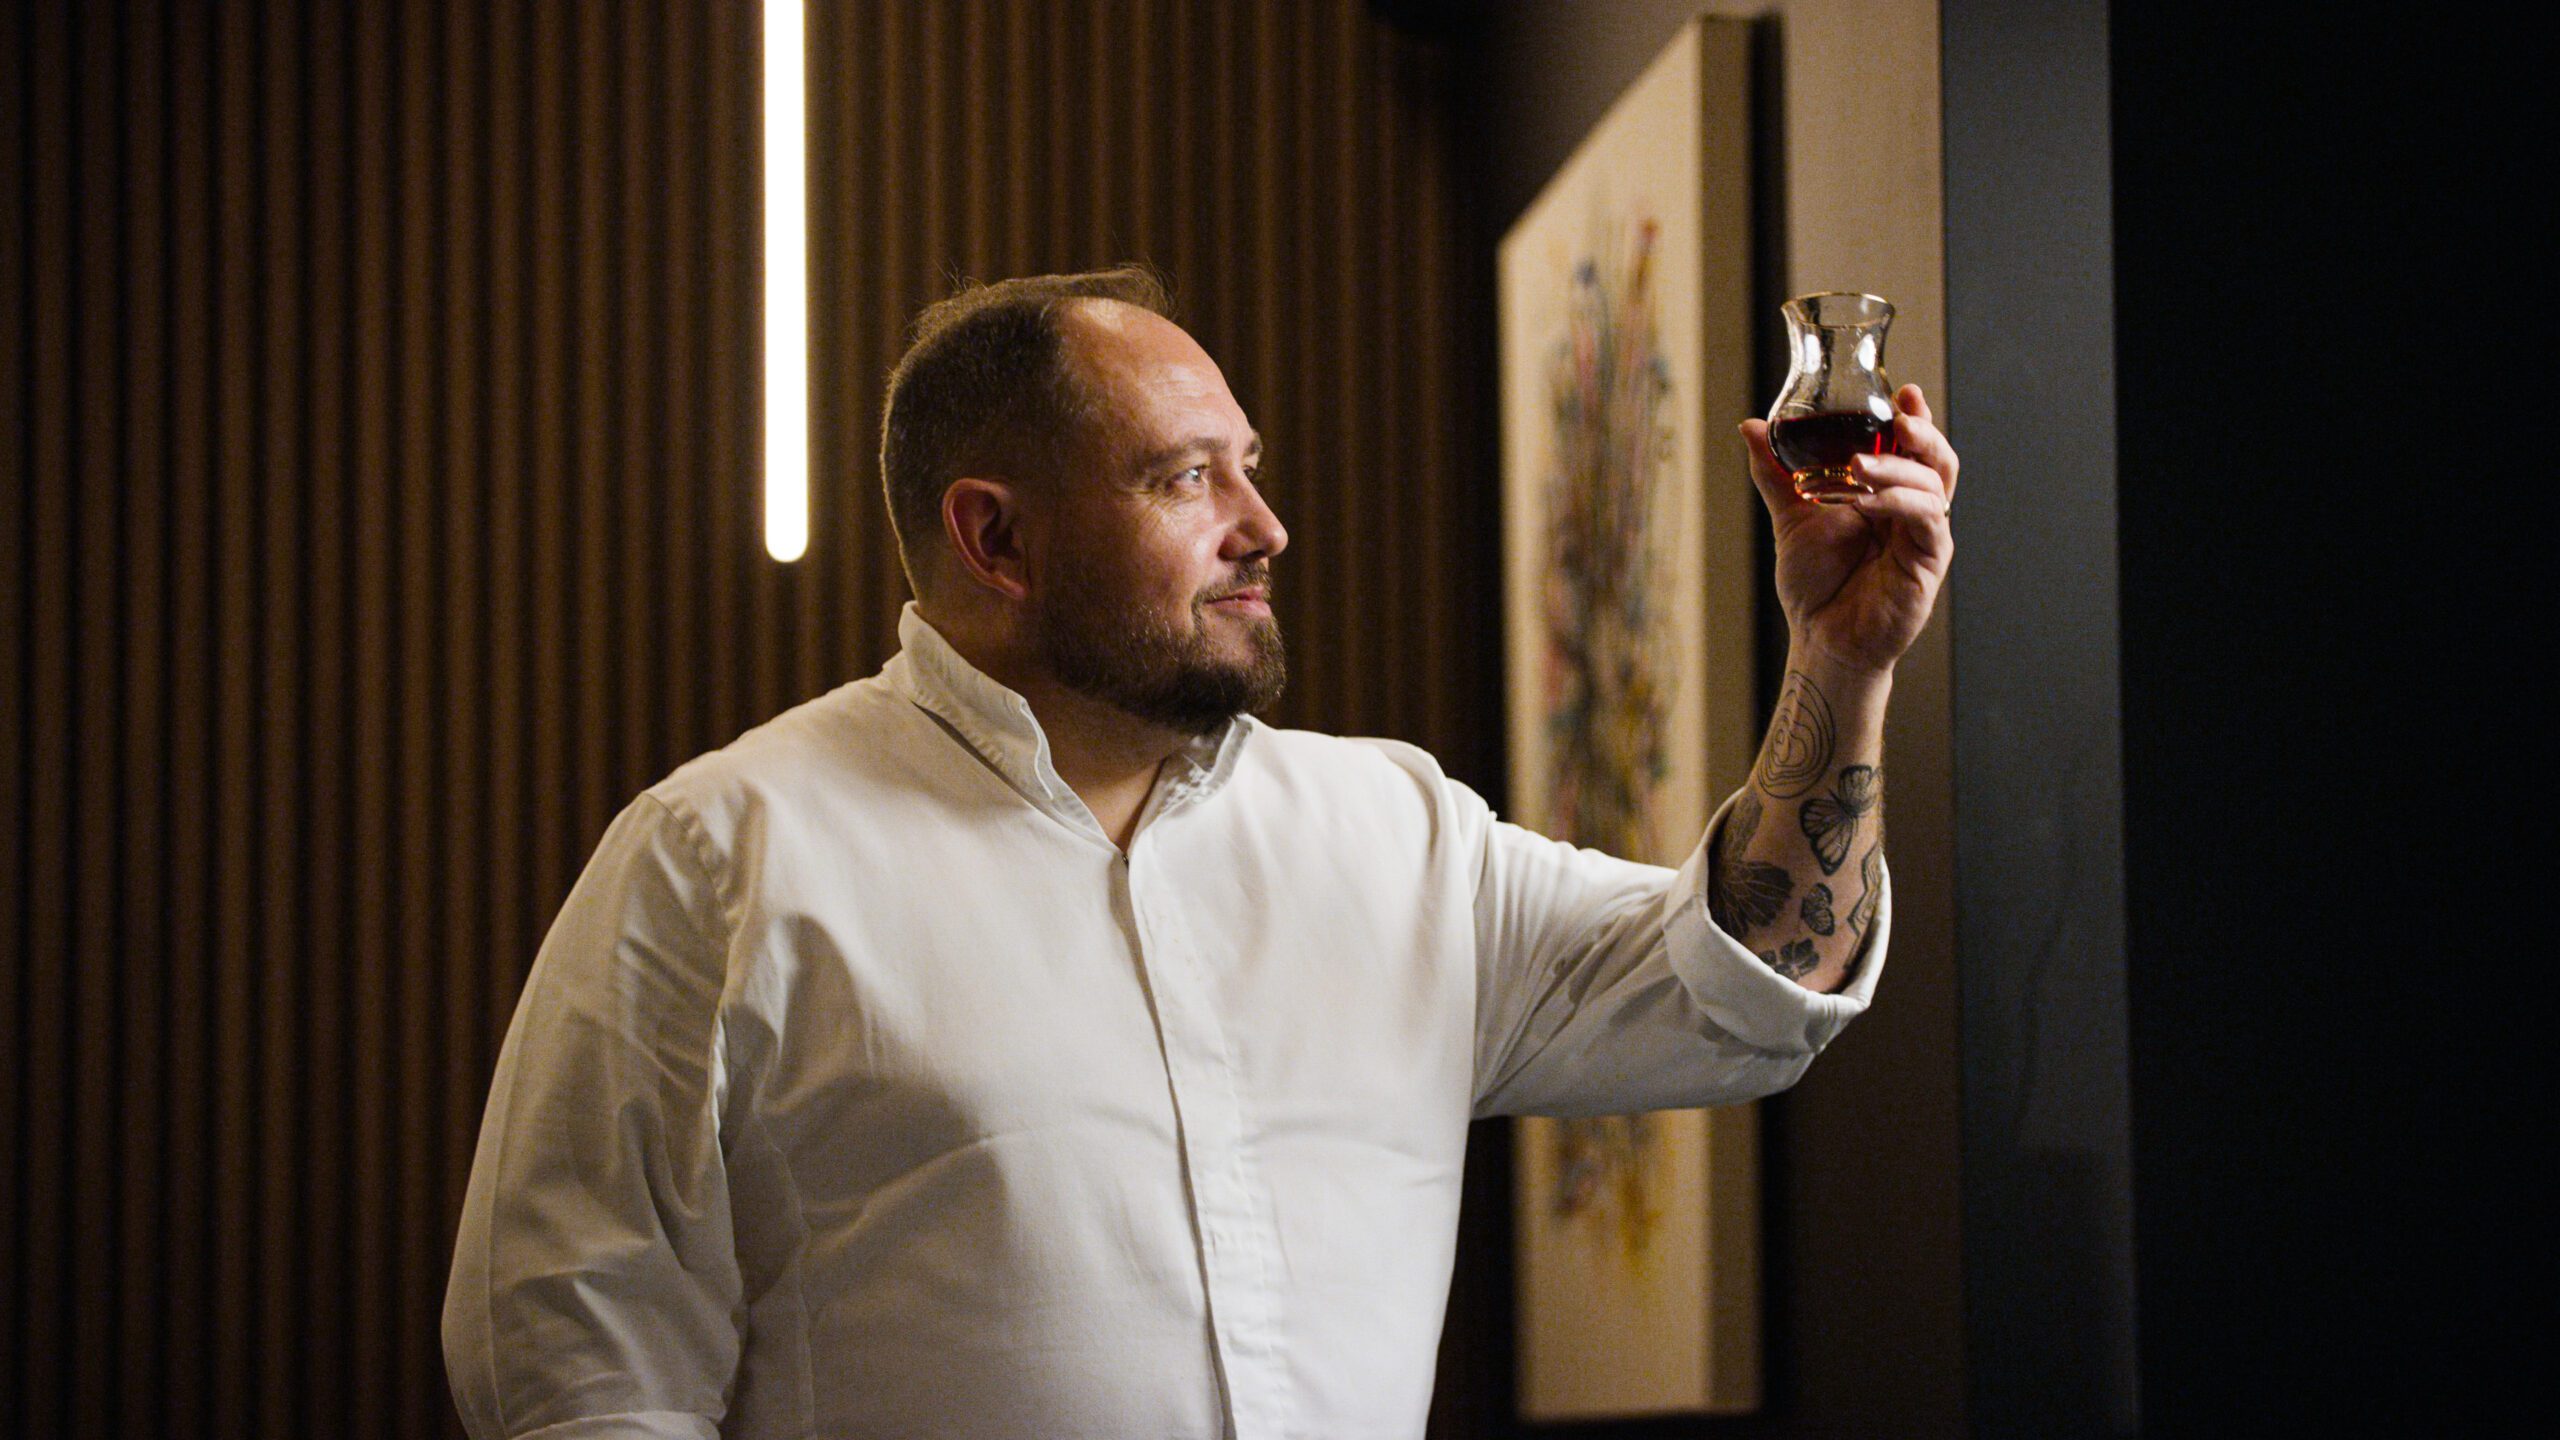 James Sommerin holding a luxury Irish whiskey glass